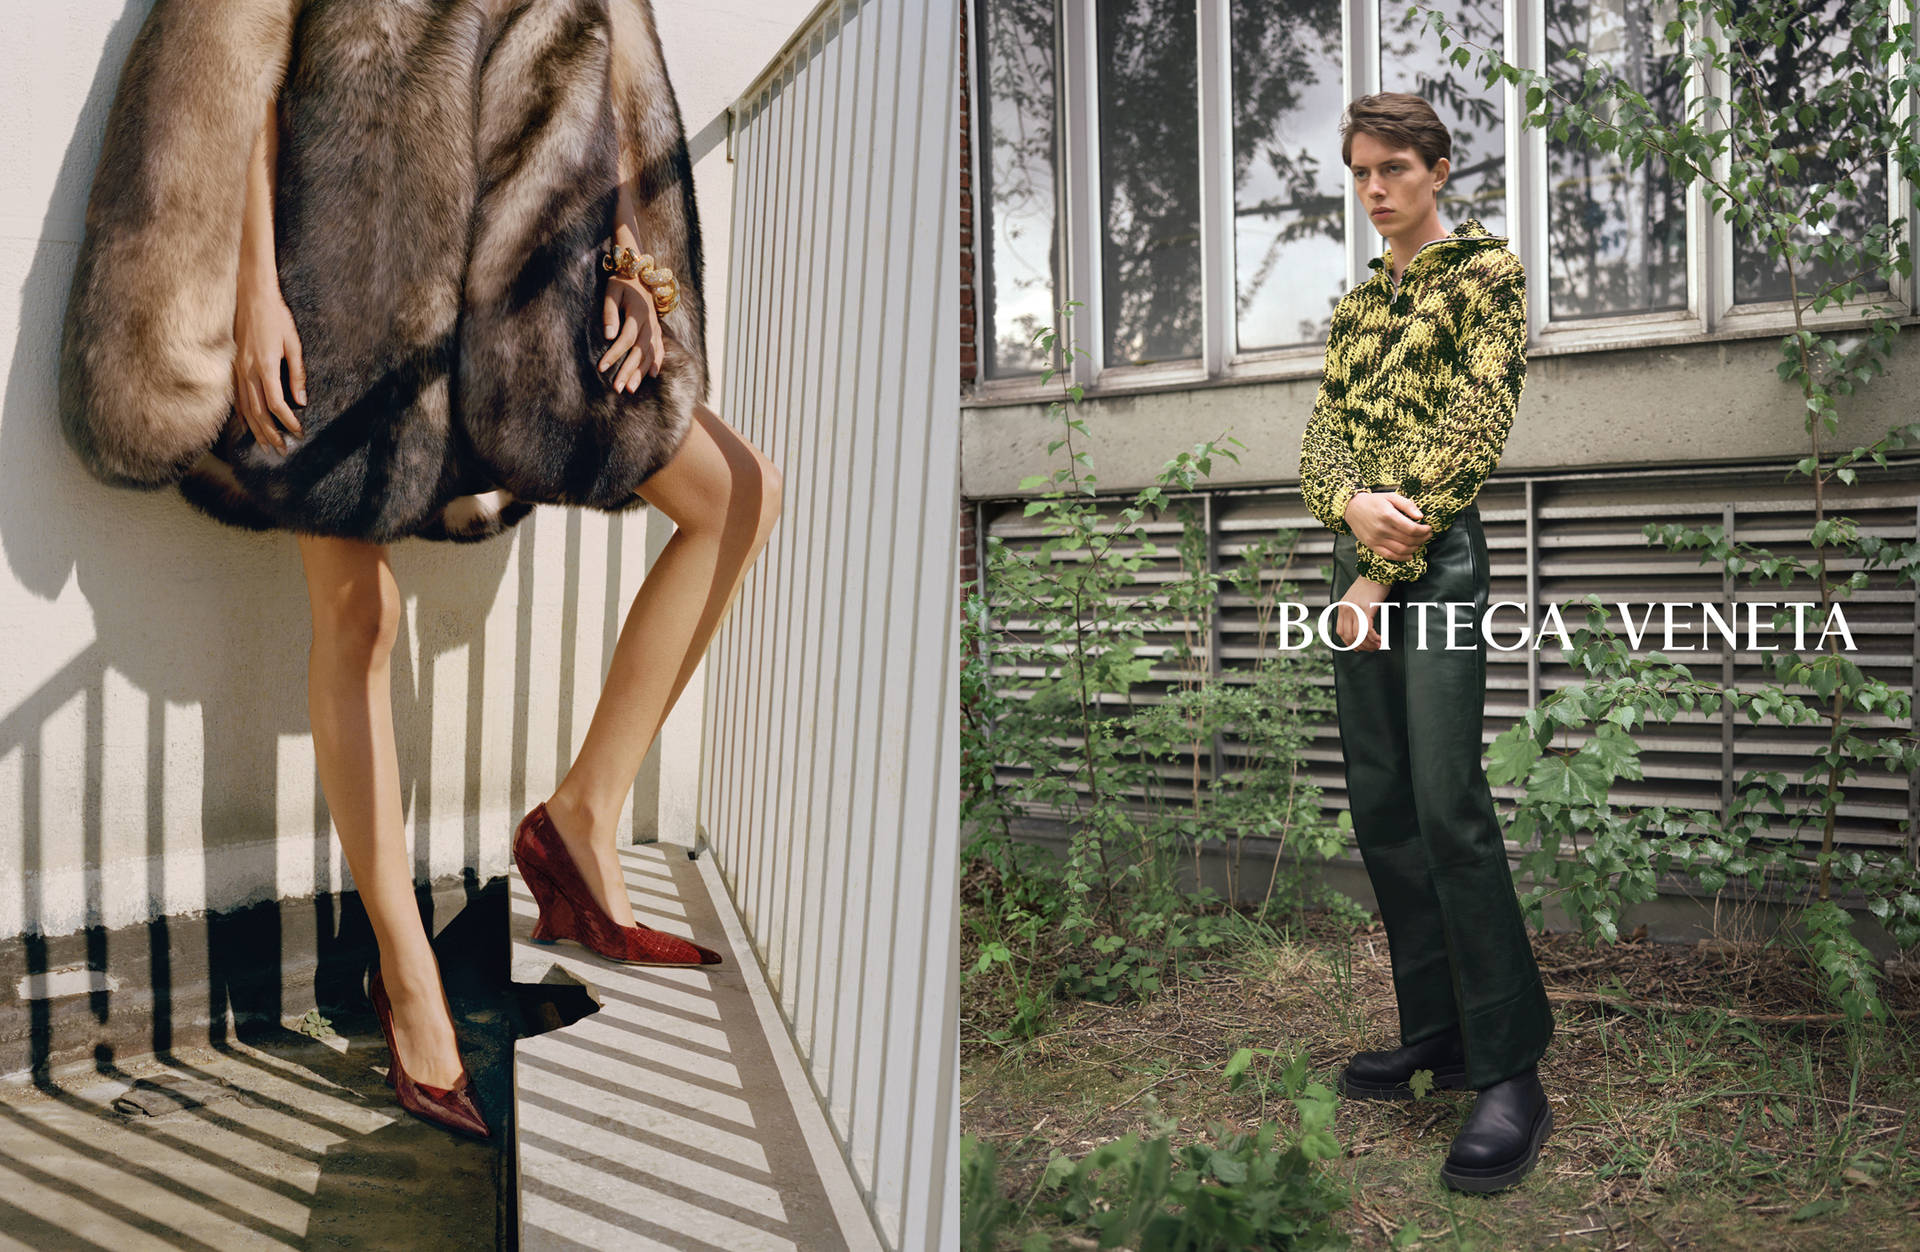 Two Photos Of Bottega Veneta Fashion Models Wallpaper